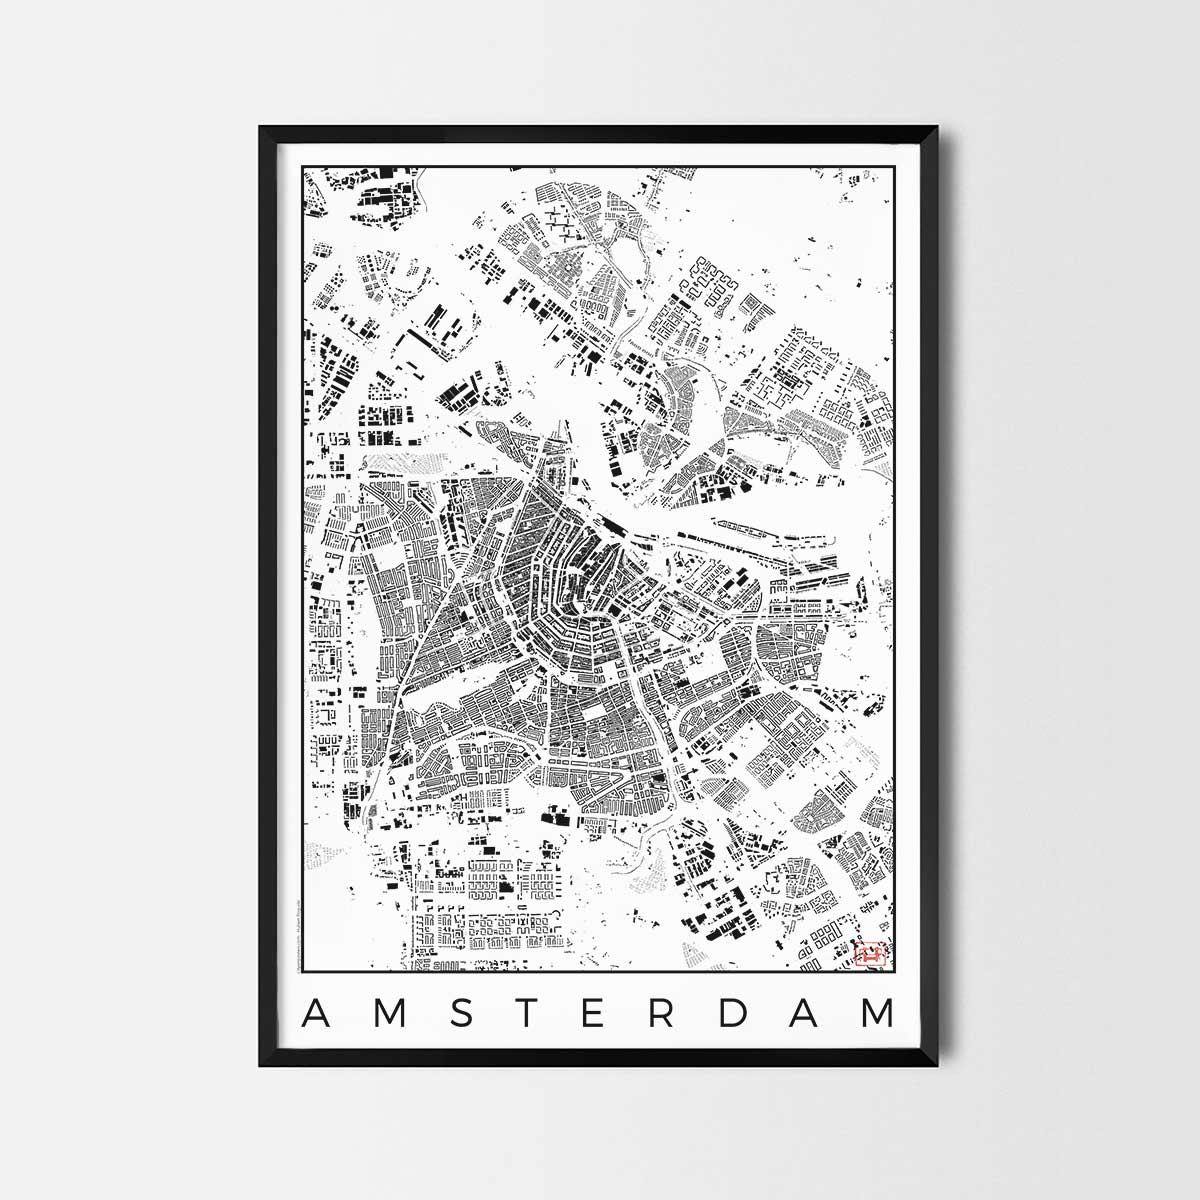 Amsterdam Map Poster schwarzplan Urban plan city map art posters map posters city art prints city posters